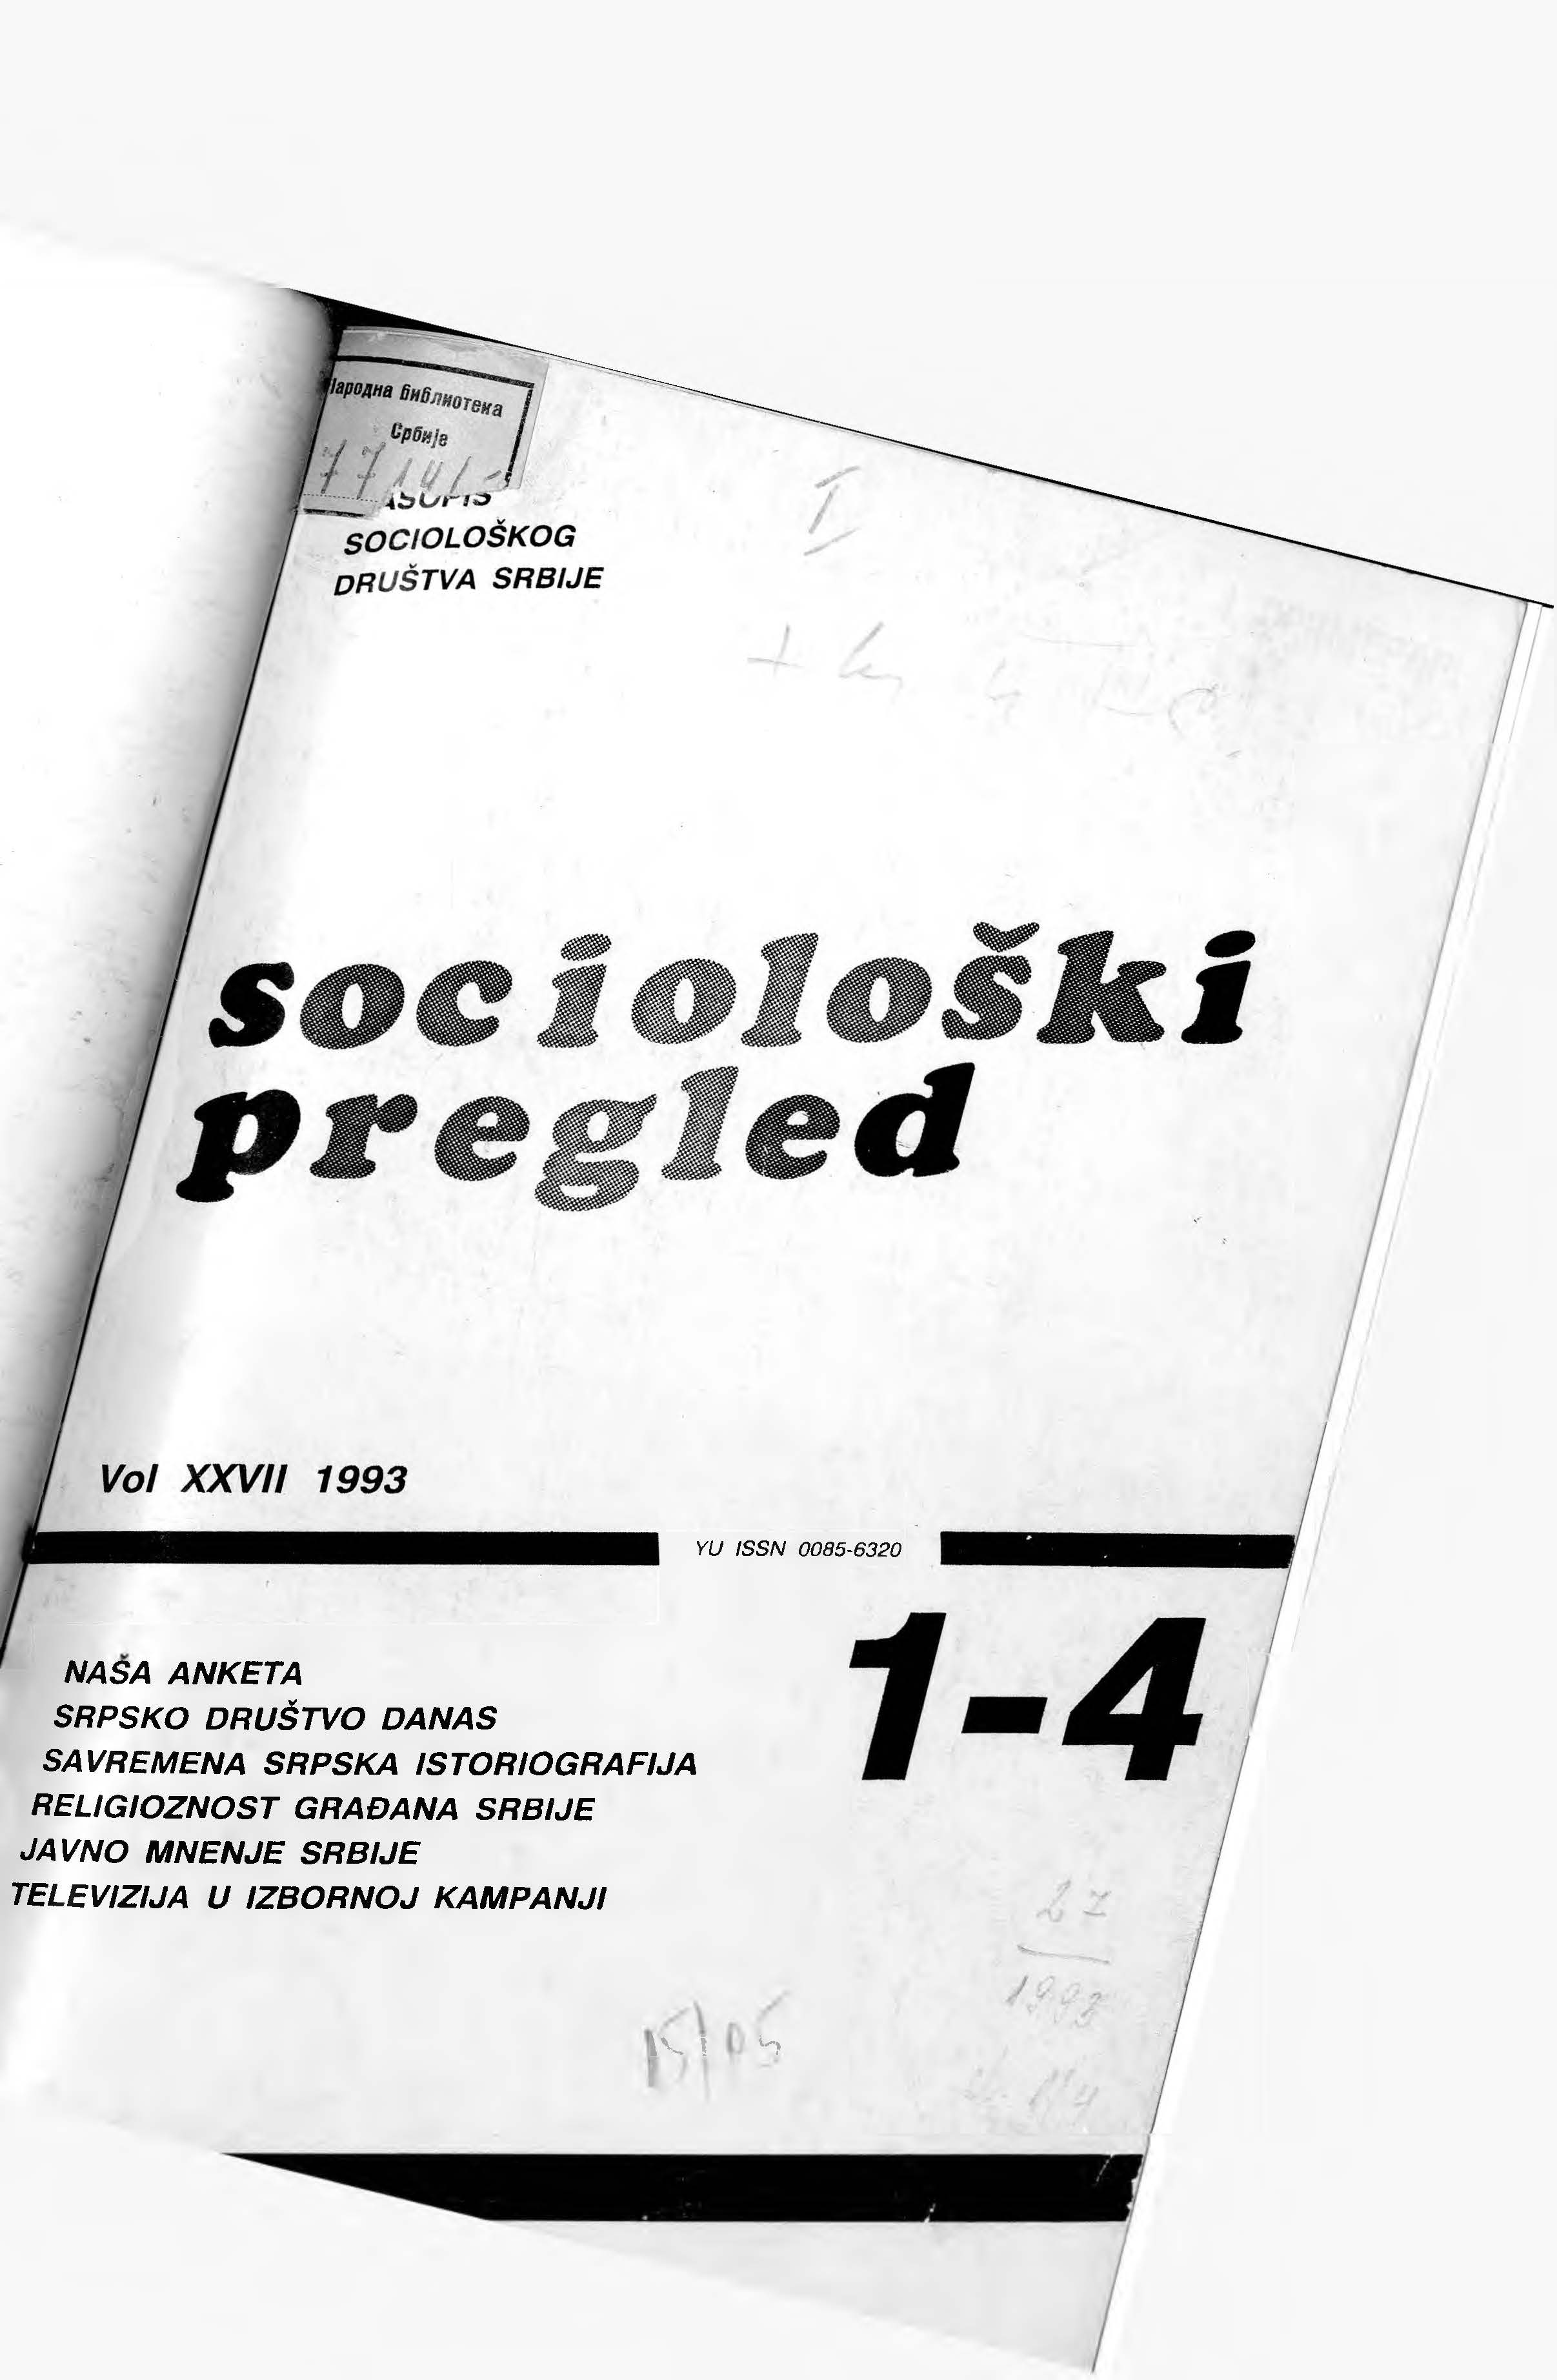 Sociological Theory and Analysis of Yugoslavia Cover Image